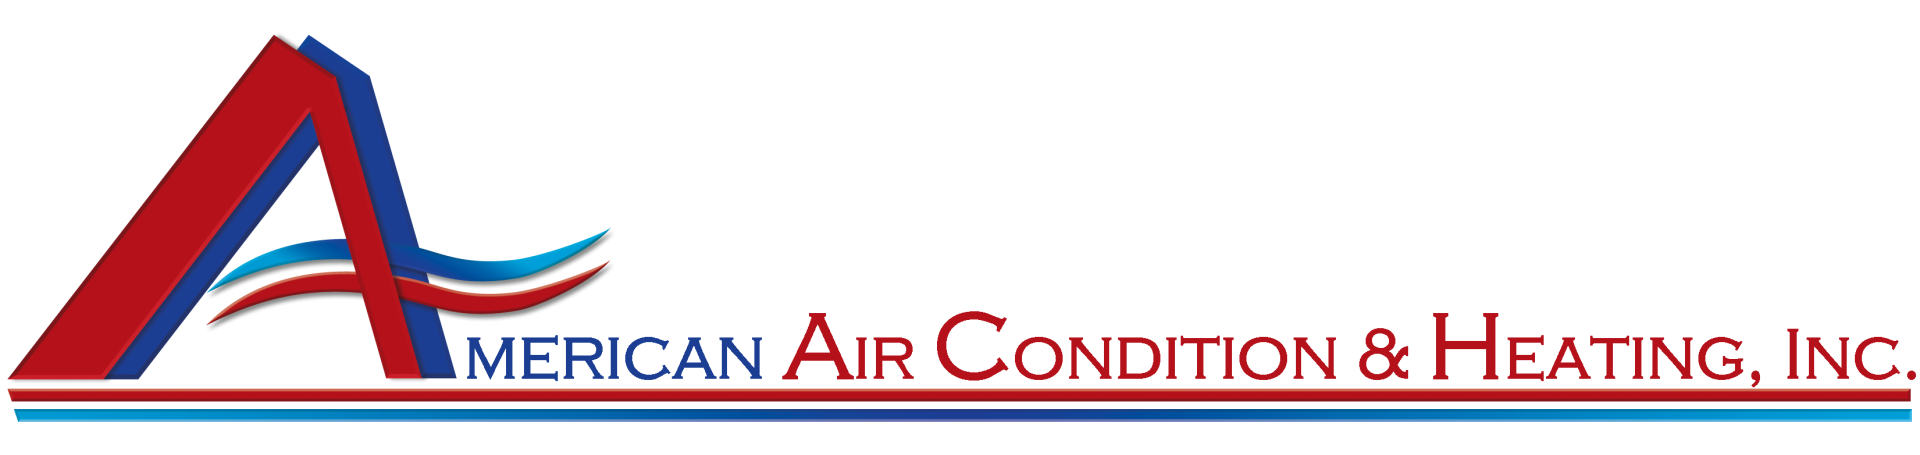 American Air Condition & Heating Inc. company logo